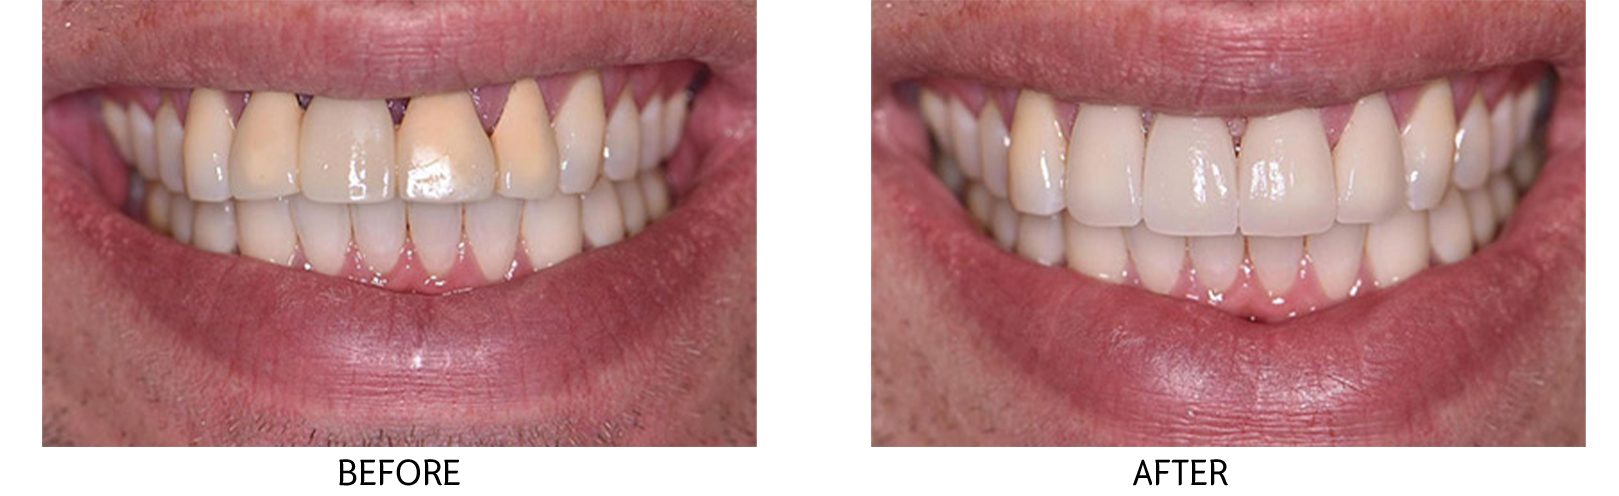 Dental Implants, Full Mouth Dental Implants, All